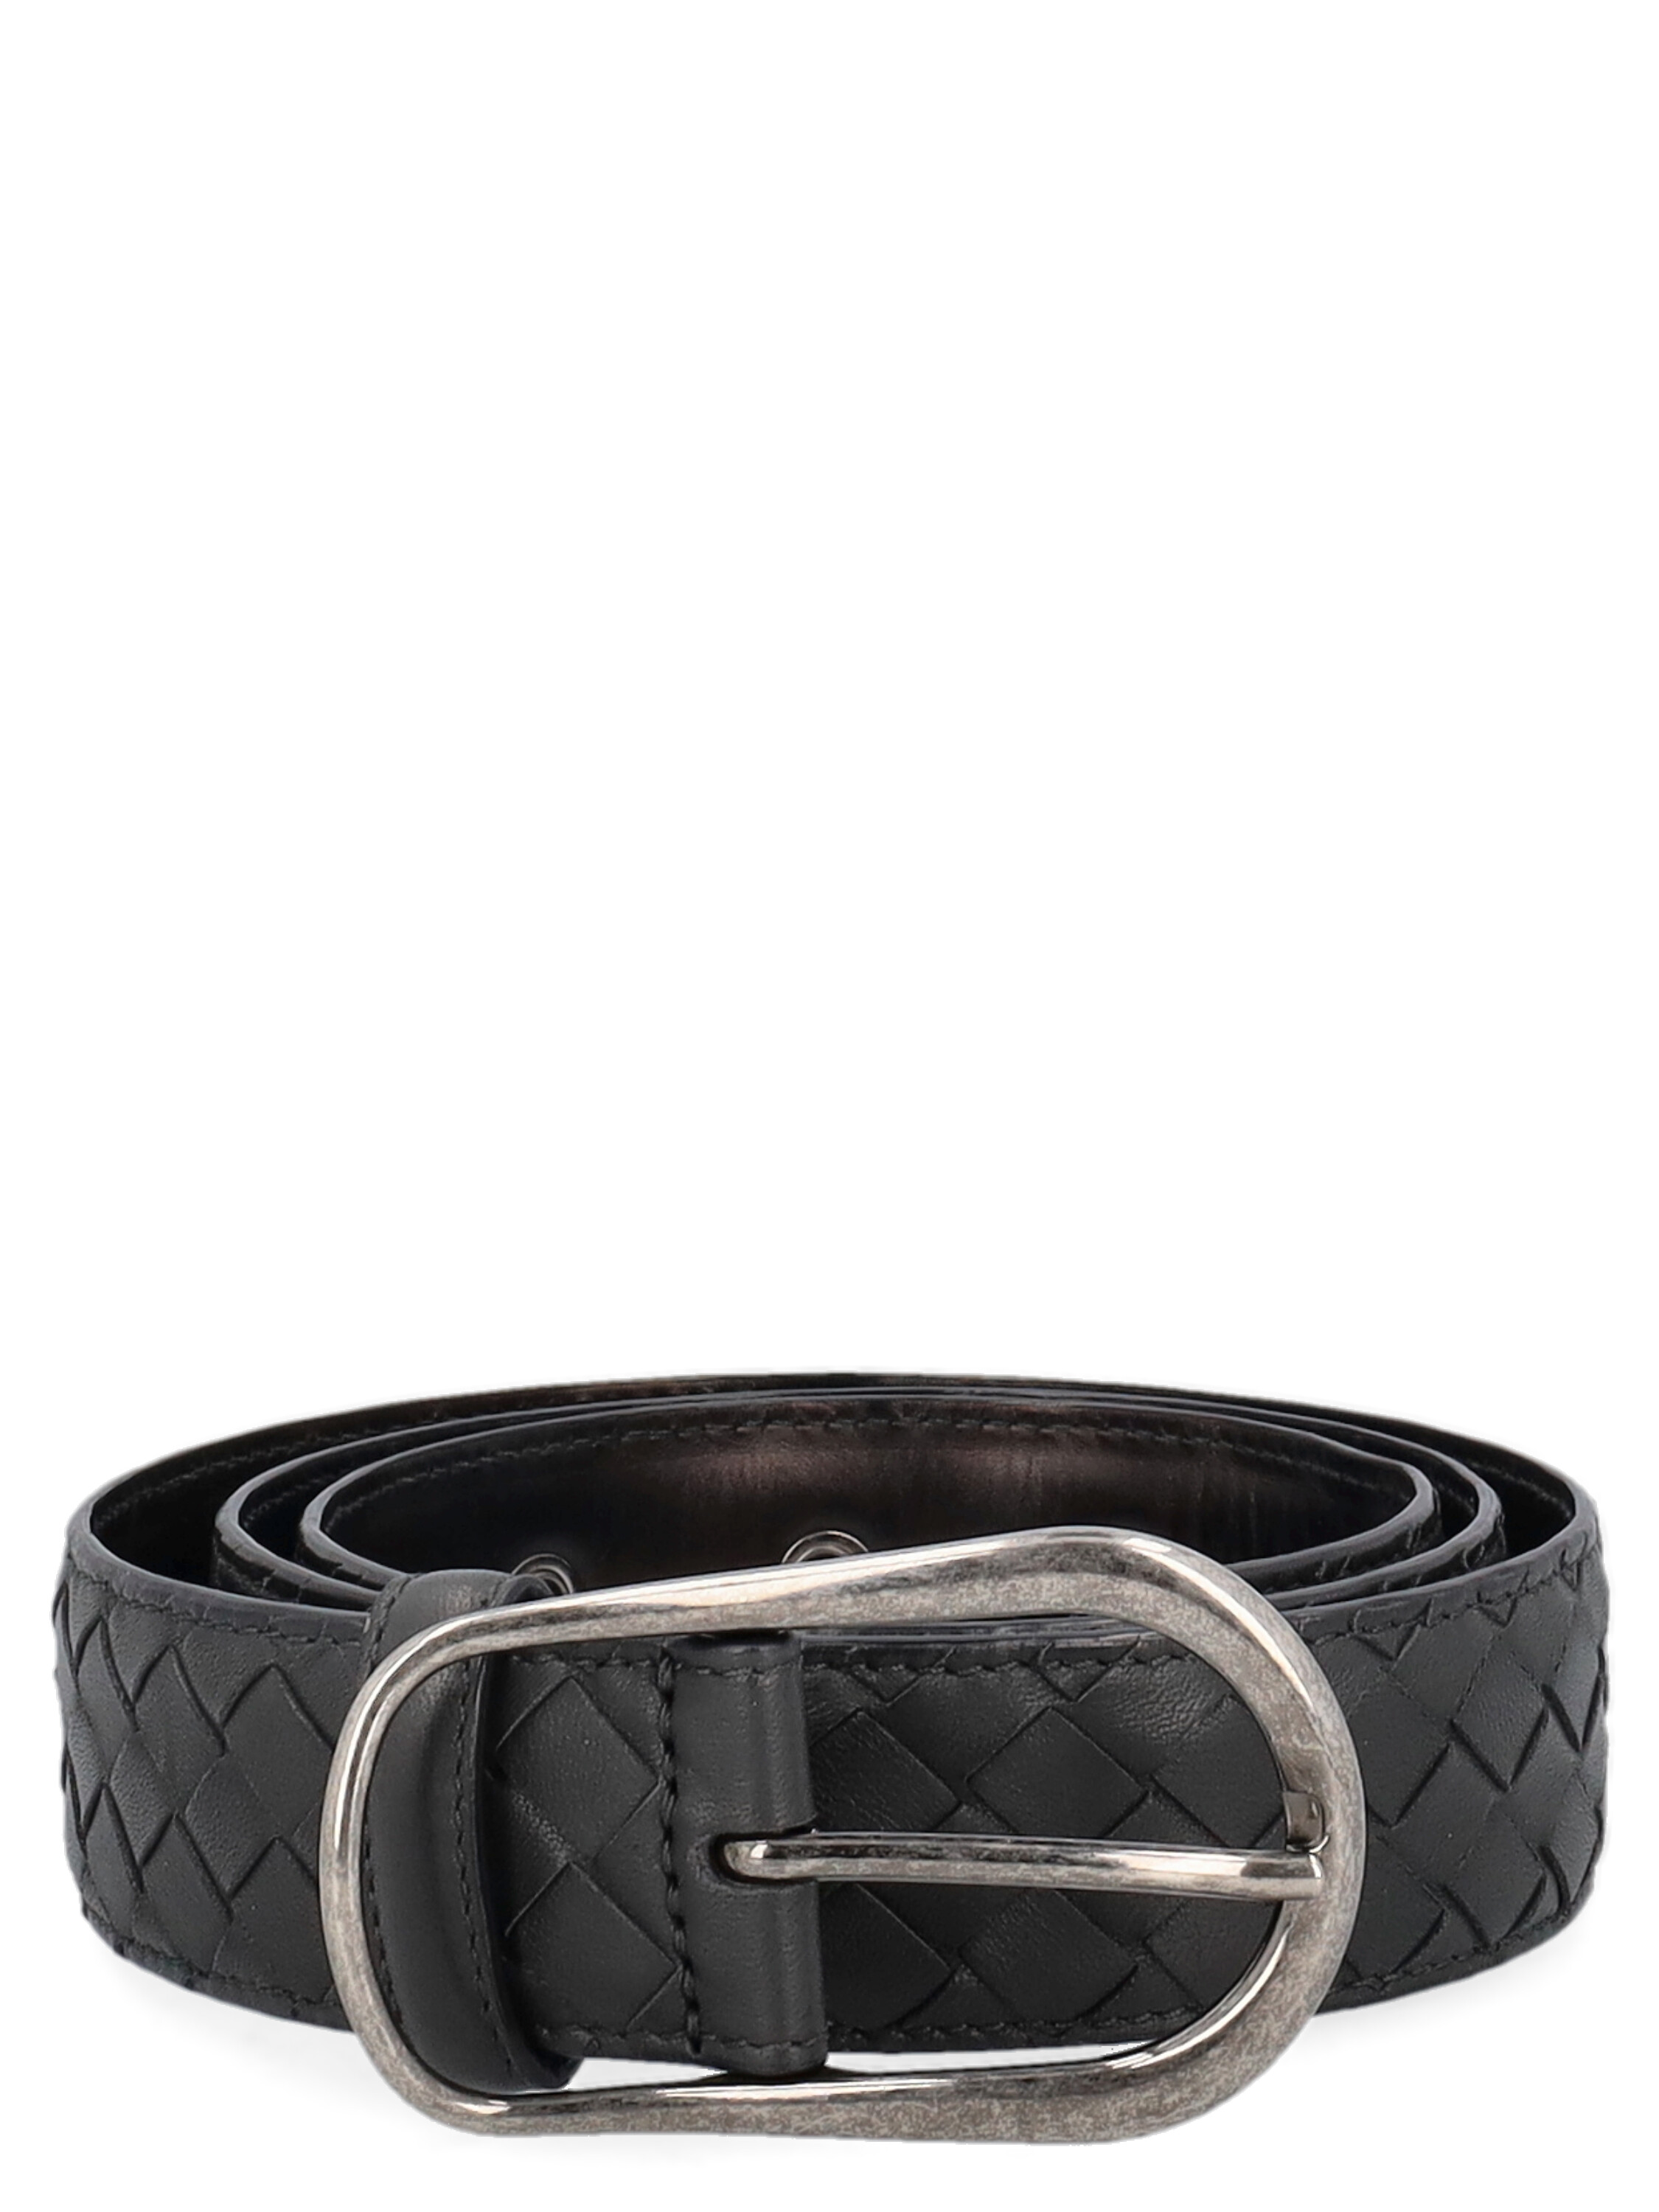 Pre-owned Bottega Veneta Women's Belts -  - In Anthracite Leather